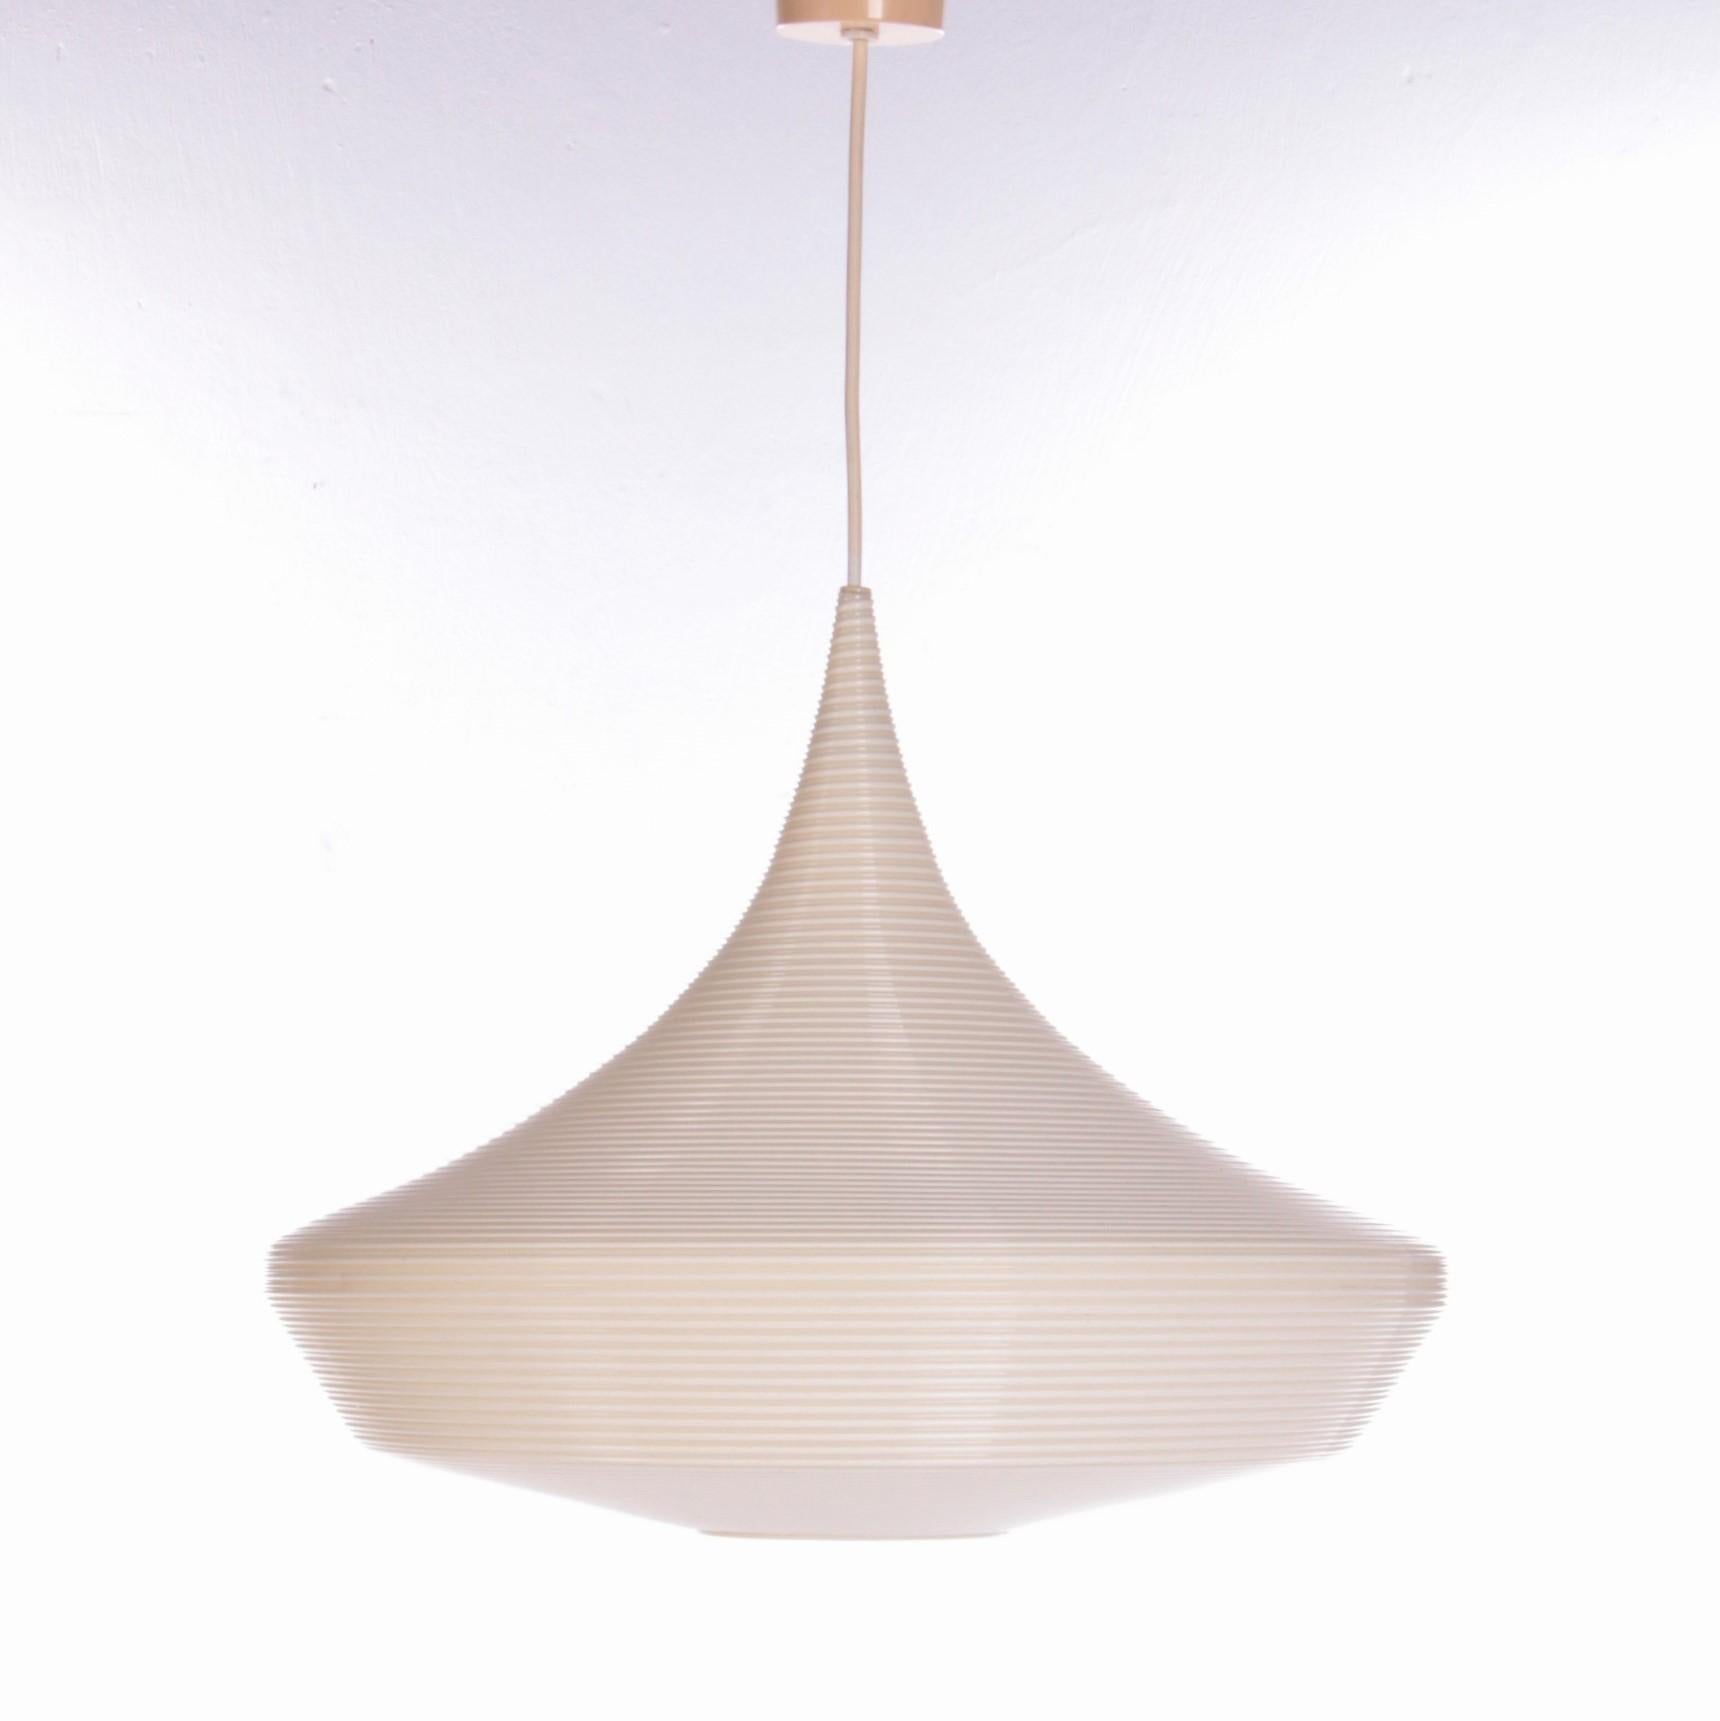 20th Century Vintage Pendant Lamp by Yasha Heifetz for Rotaflex Heifetz, 1960s For Sale